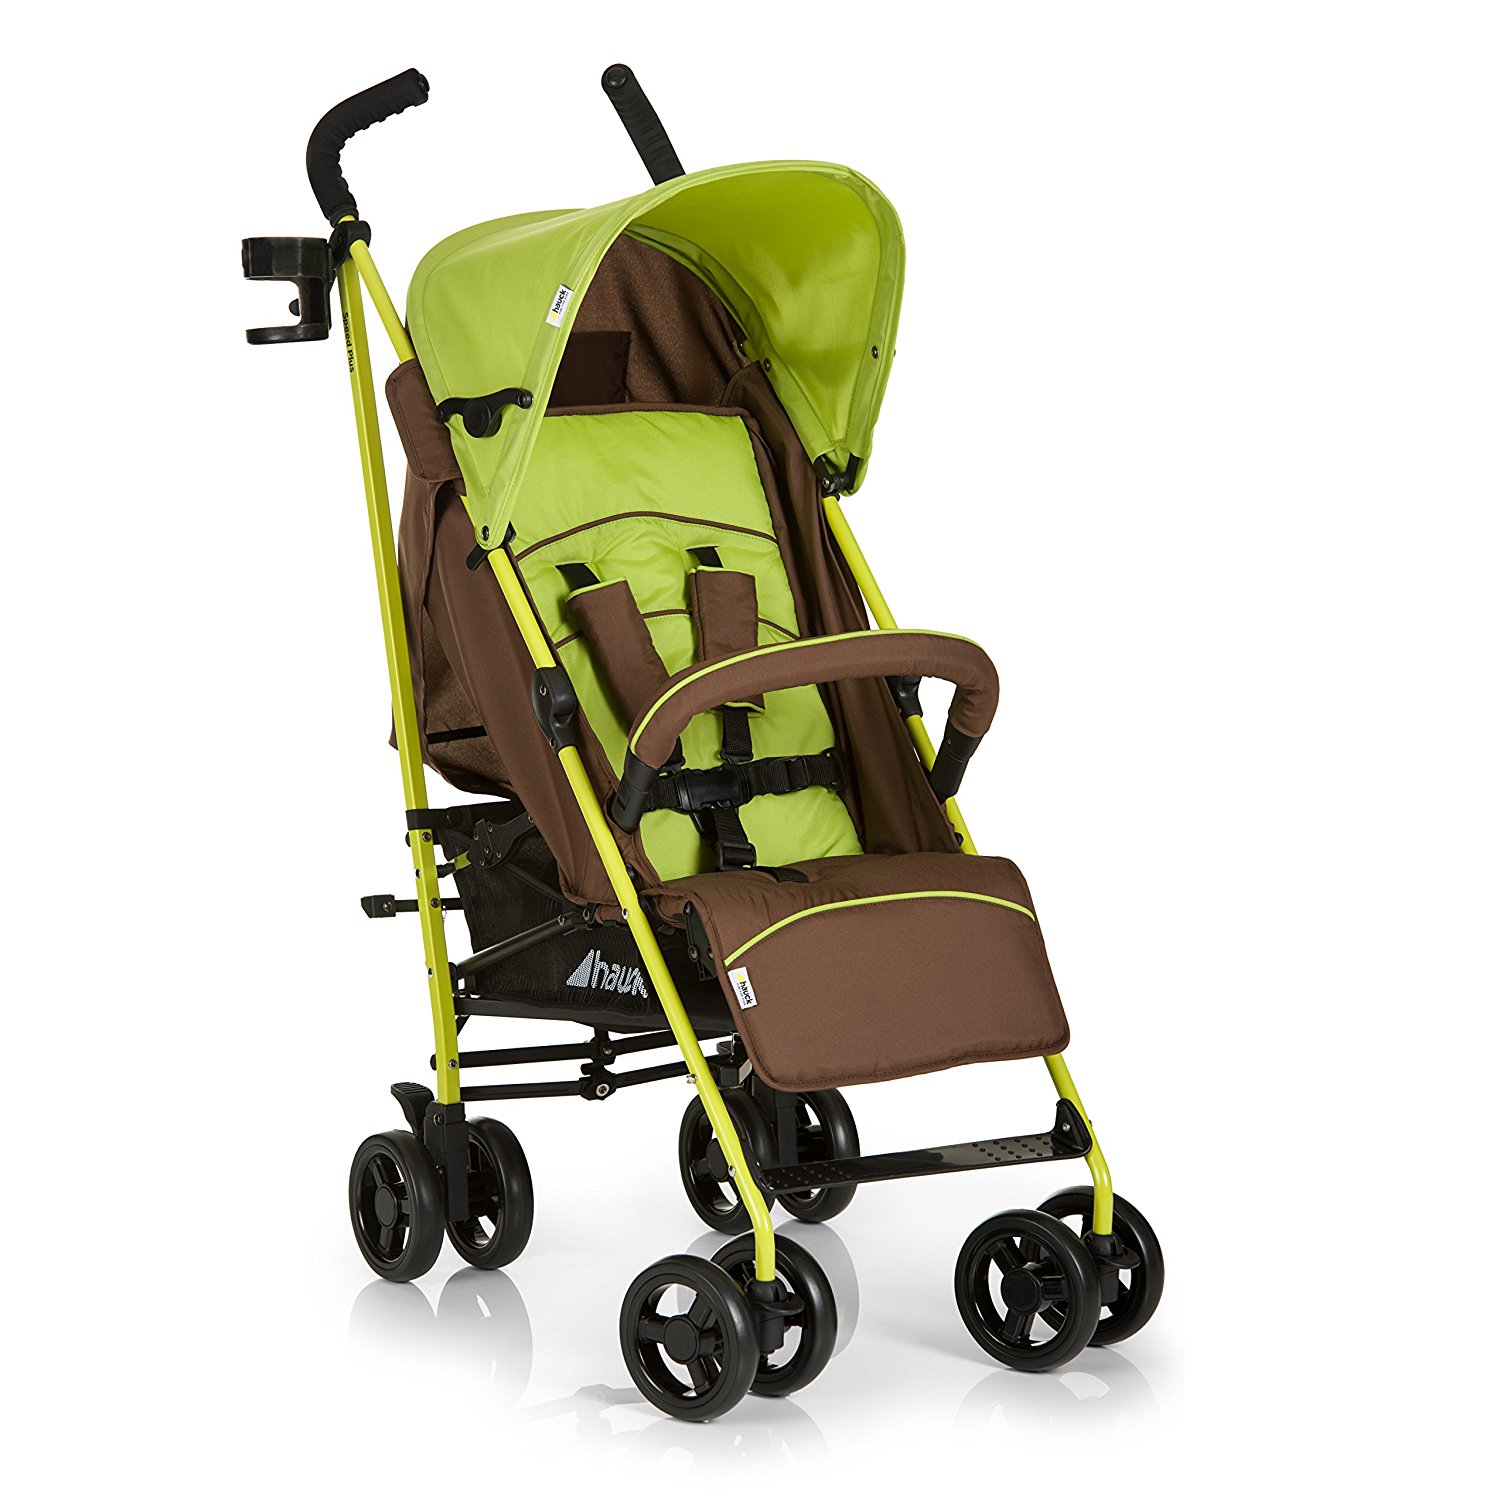 Hauck Speed Plus Four Wheel Pushchair - Brown/Green